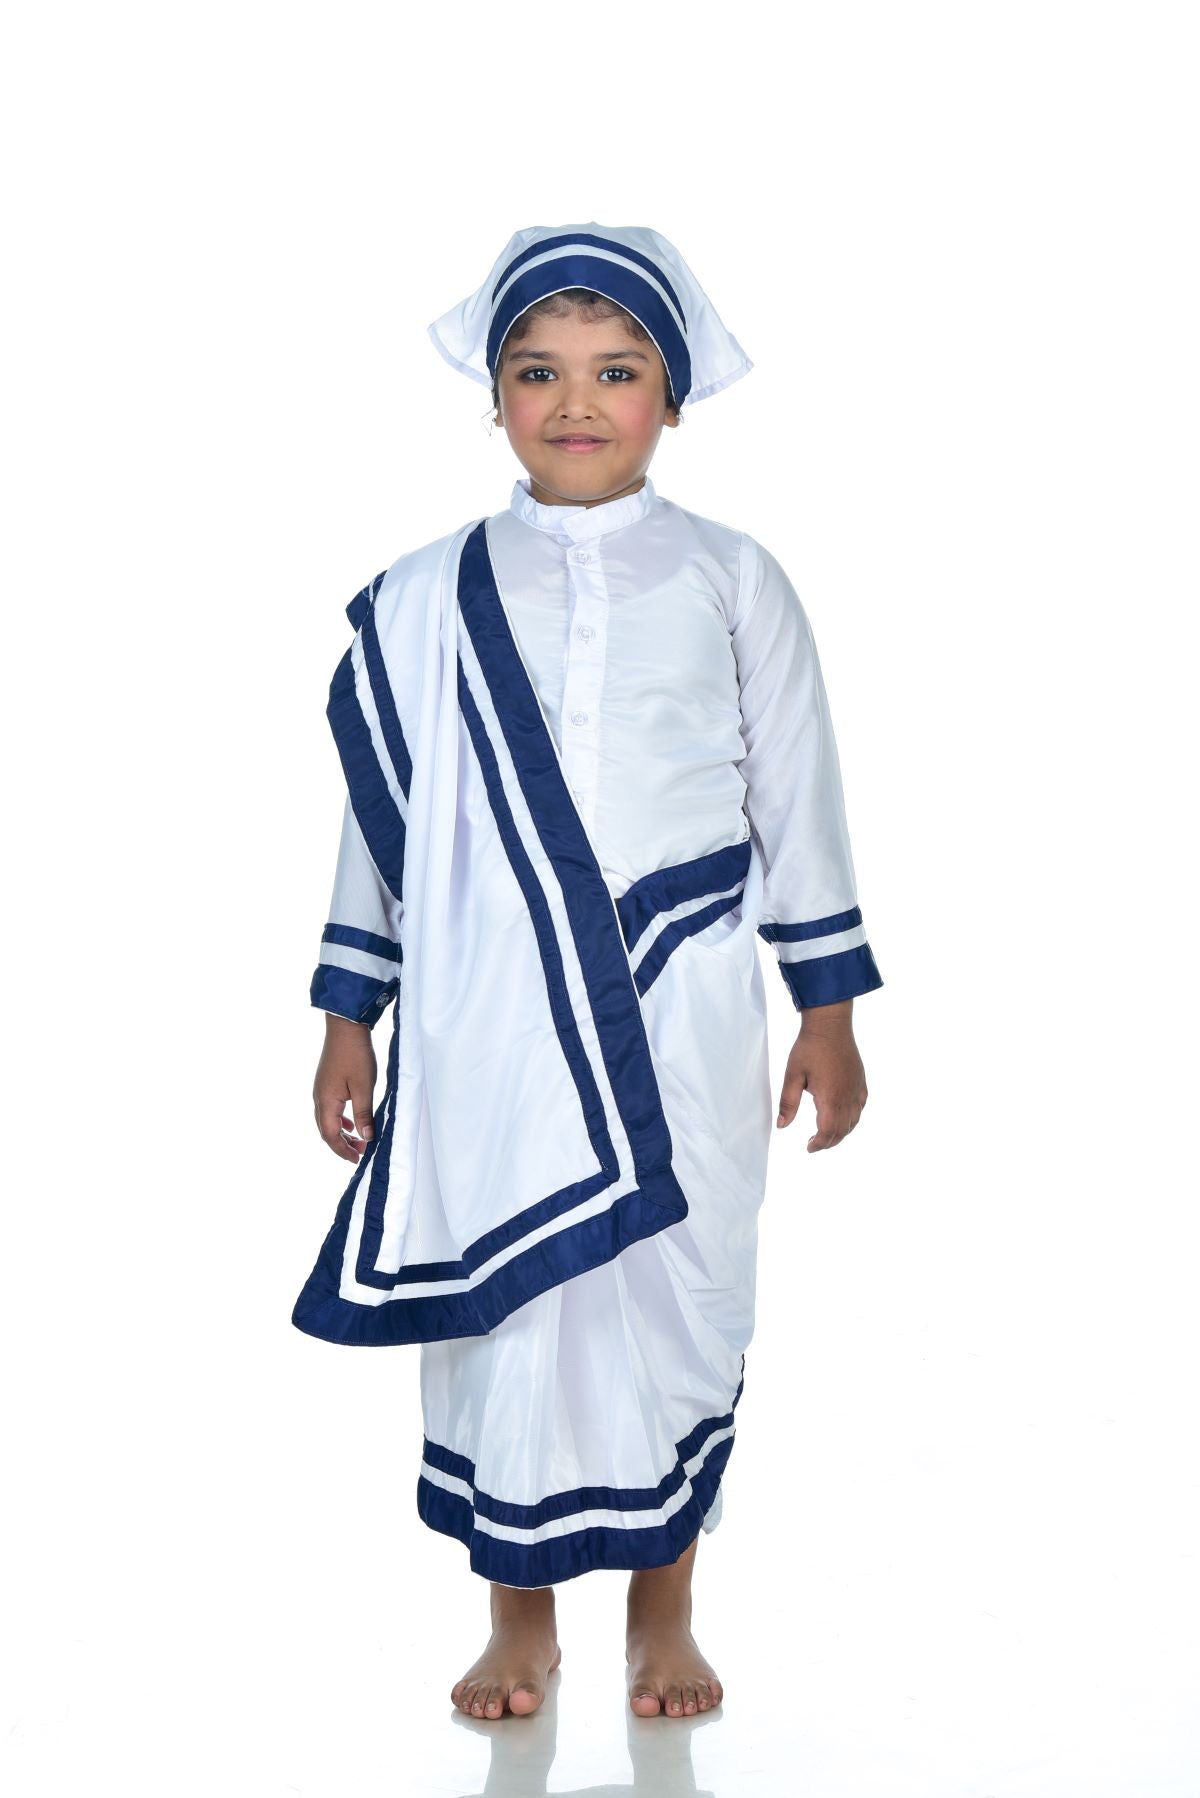 Best Stores For School Costume Needs In Chennai | Kidsstoppress